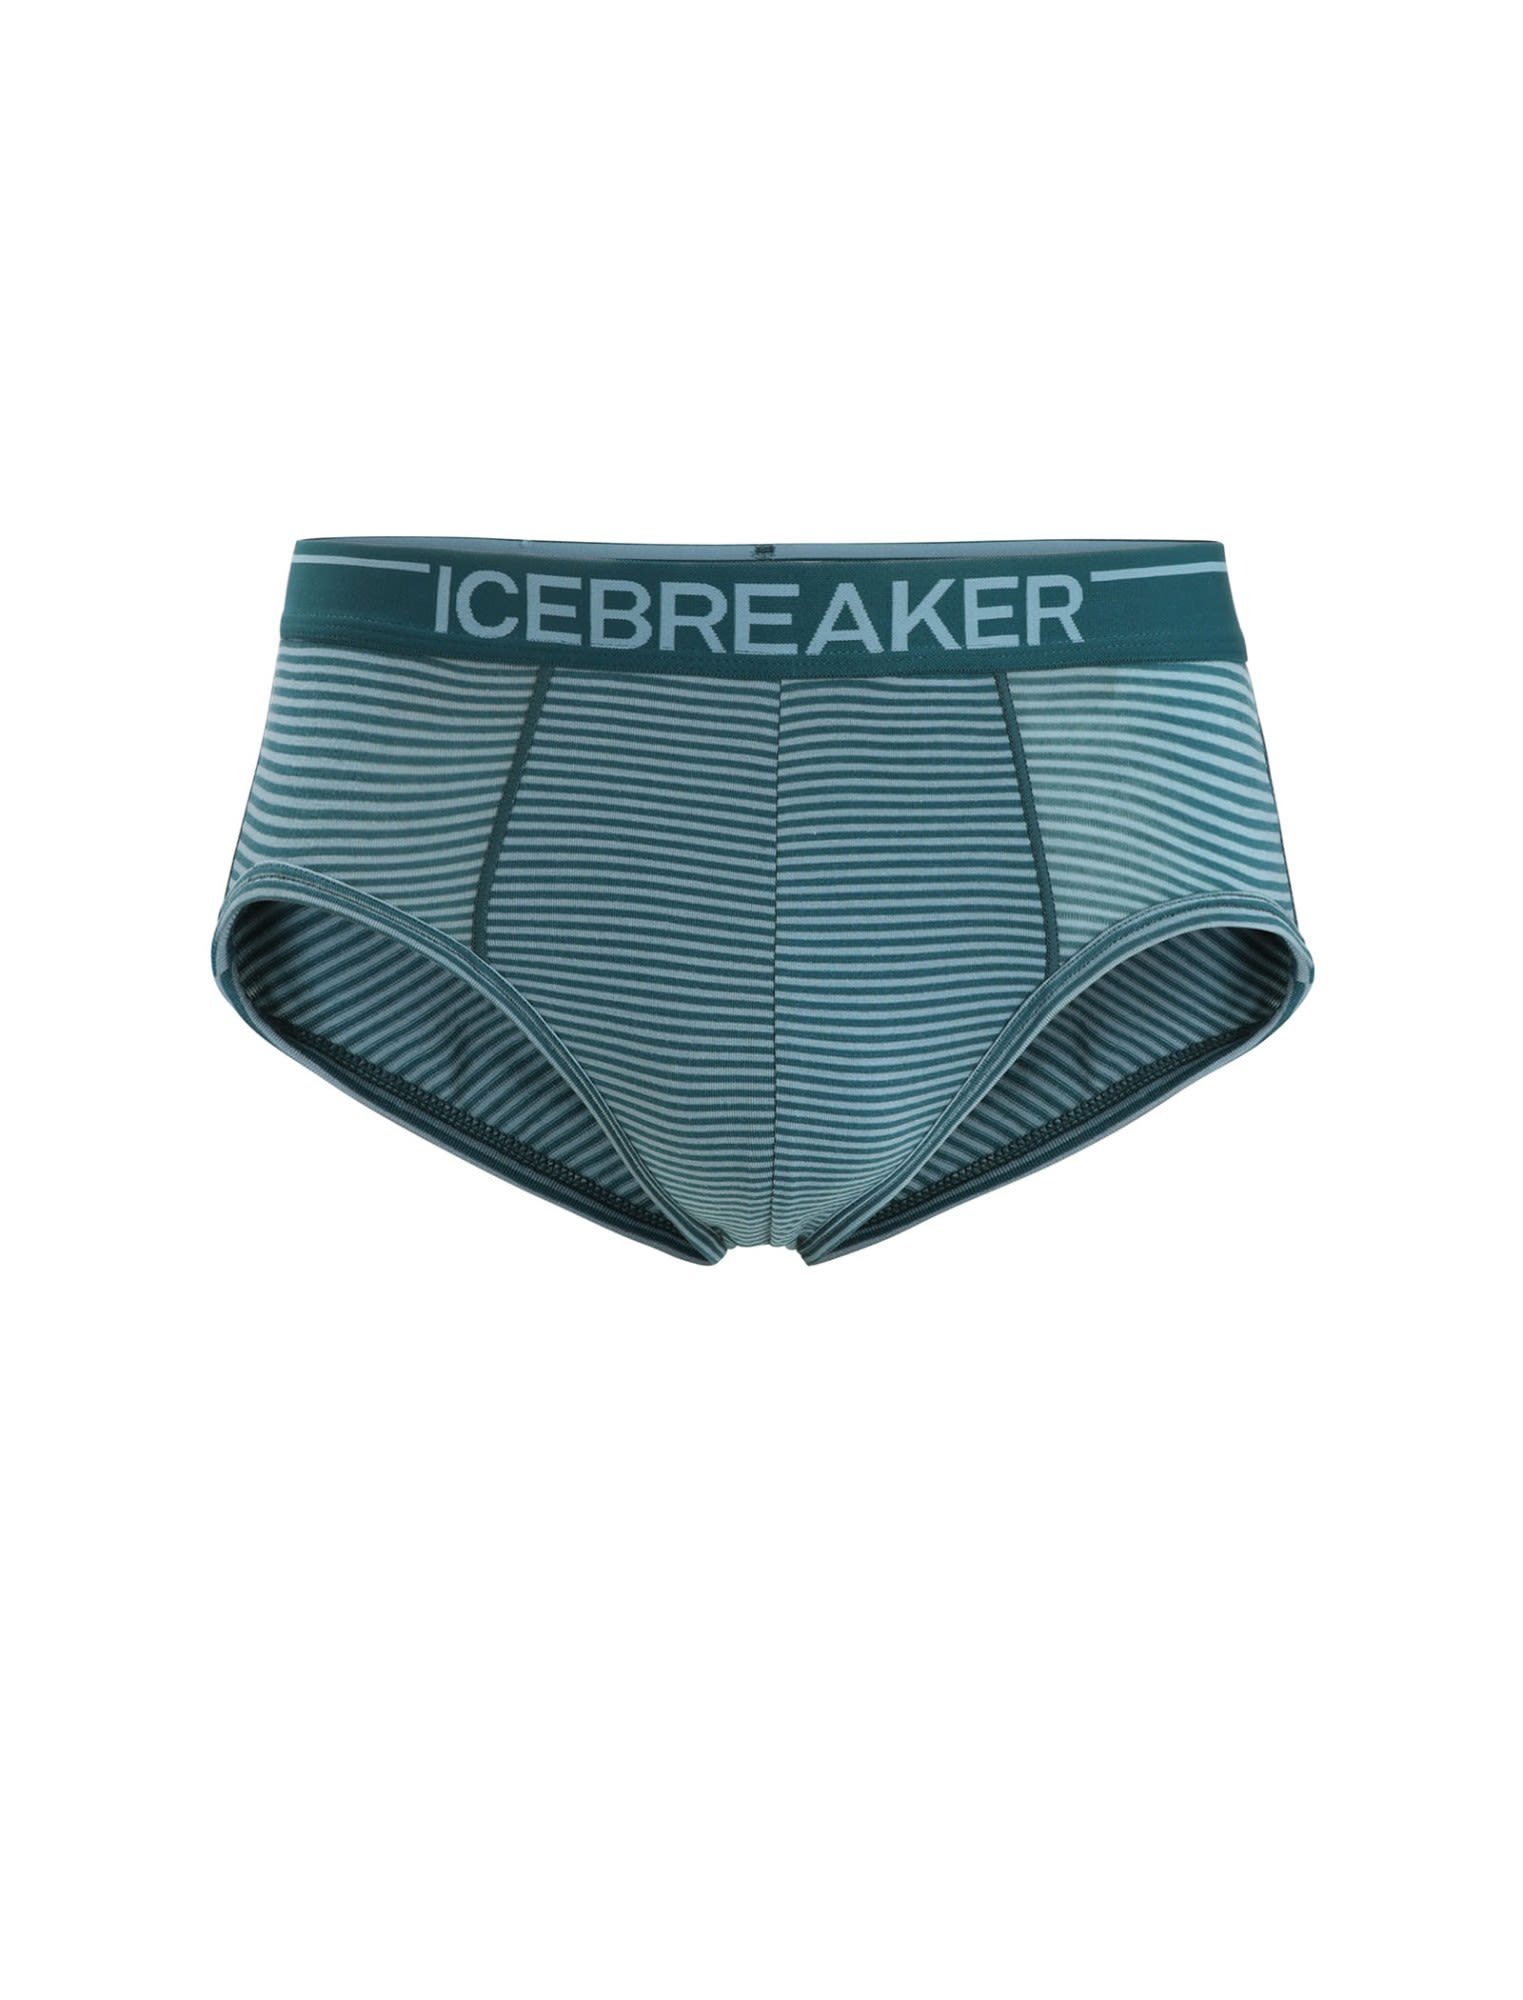 Icebreaker S Herren Anatomica - Lange Glory Unterhose Icebreaker Astral Green Kurze Blue - M Briefs